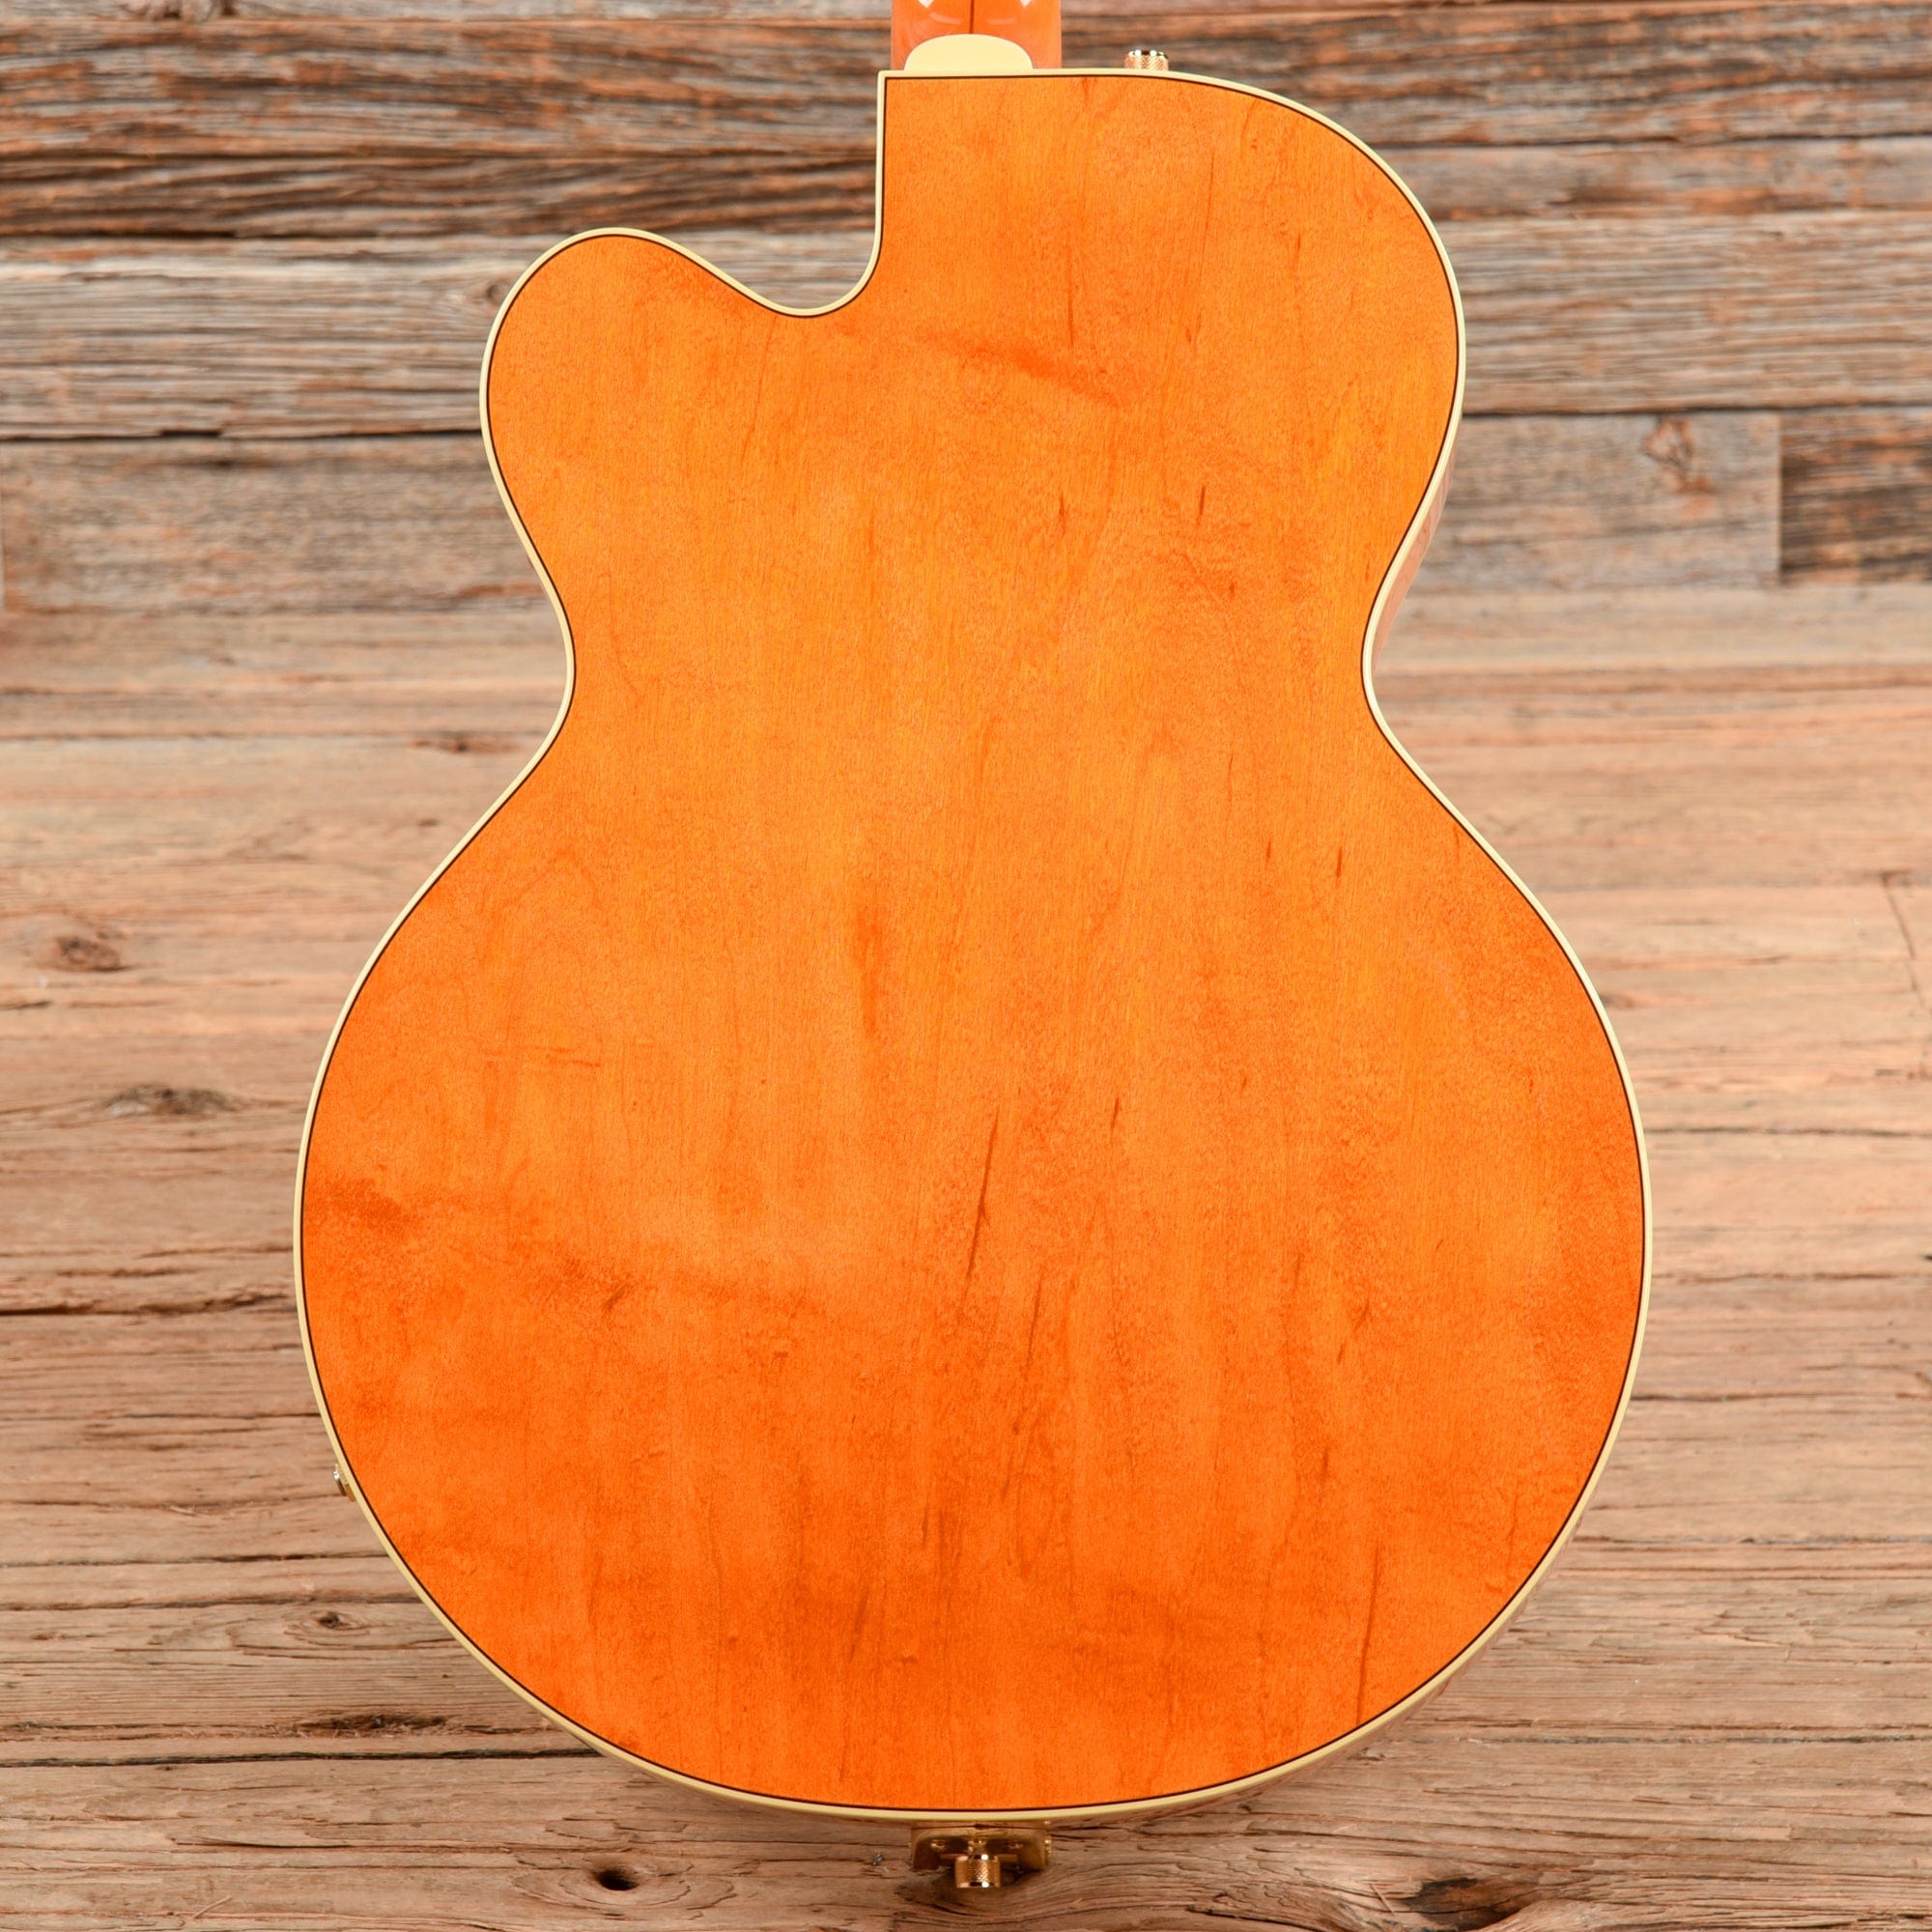 Gretsch G6120 Eddie Cochran Signature Hollow Body Orange 2018 Electric Guitars / Hollow Body